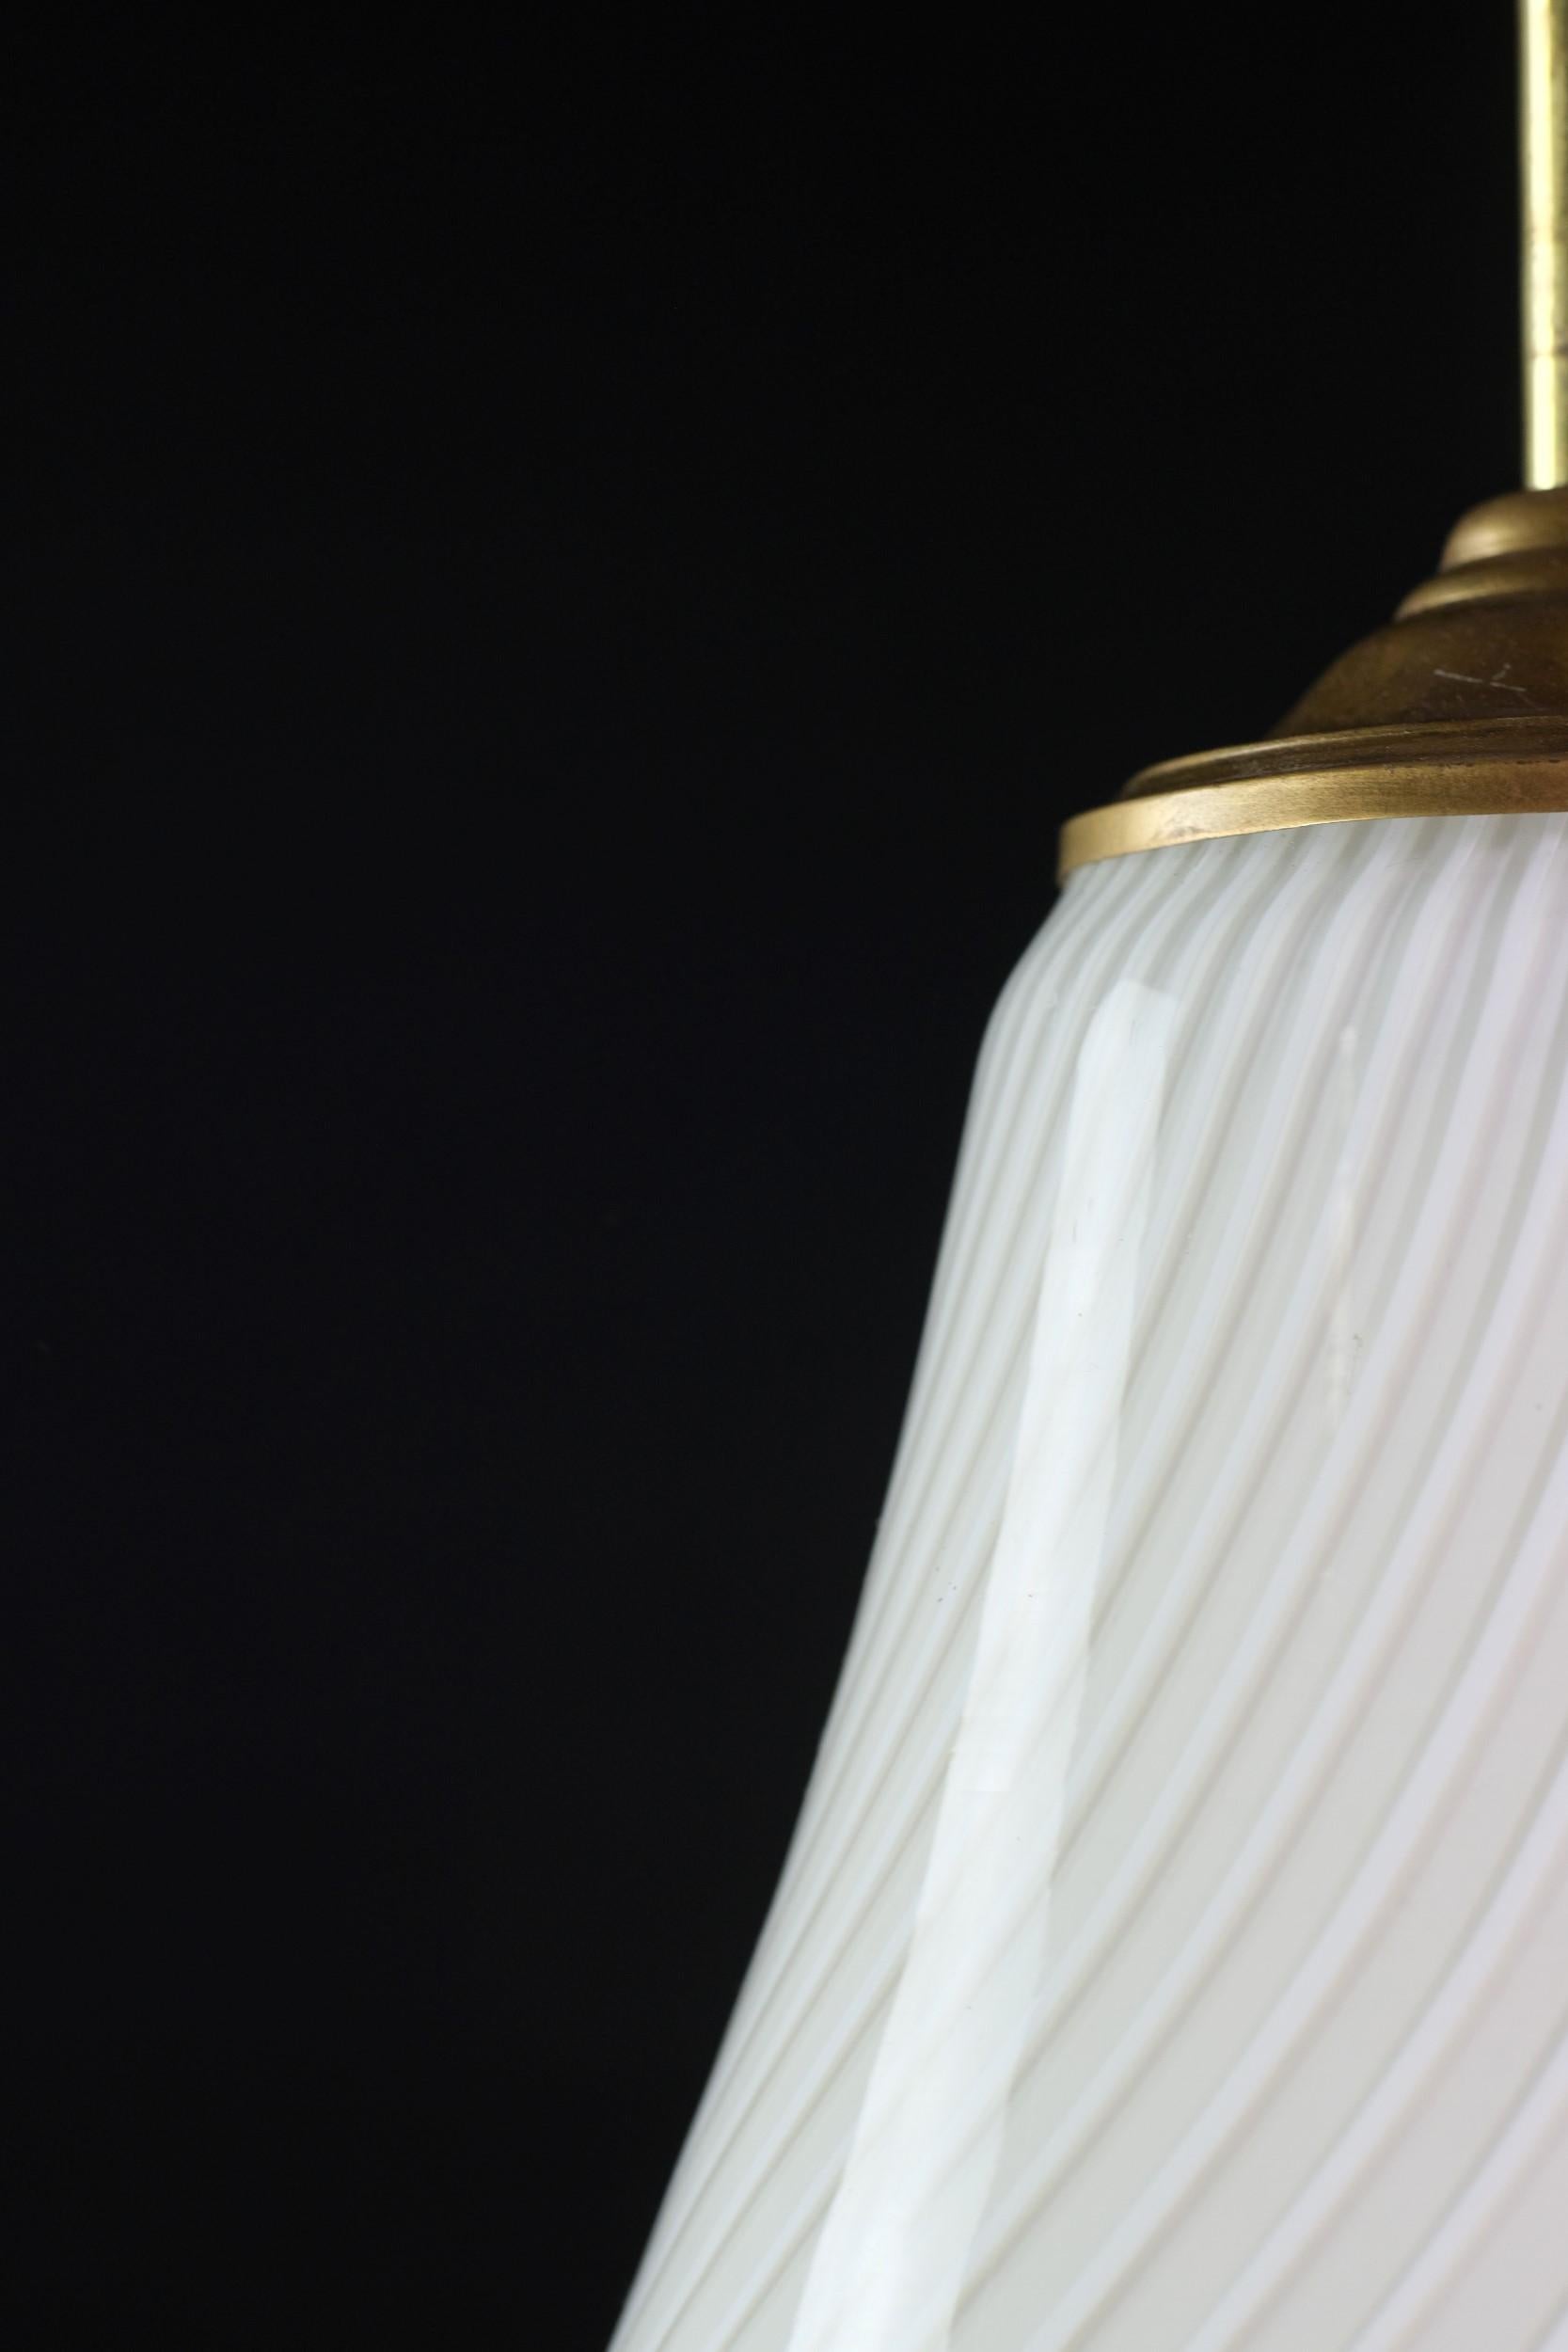 Vetri Murano Hand Blown Swirled Glass Pendant Light with Brass Pole Fitter 1